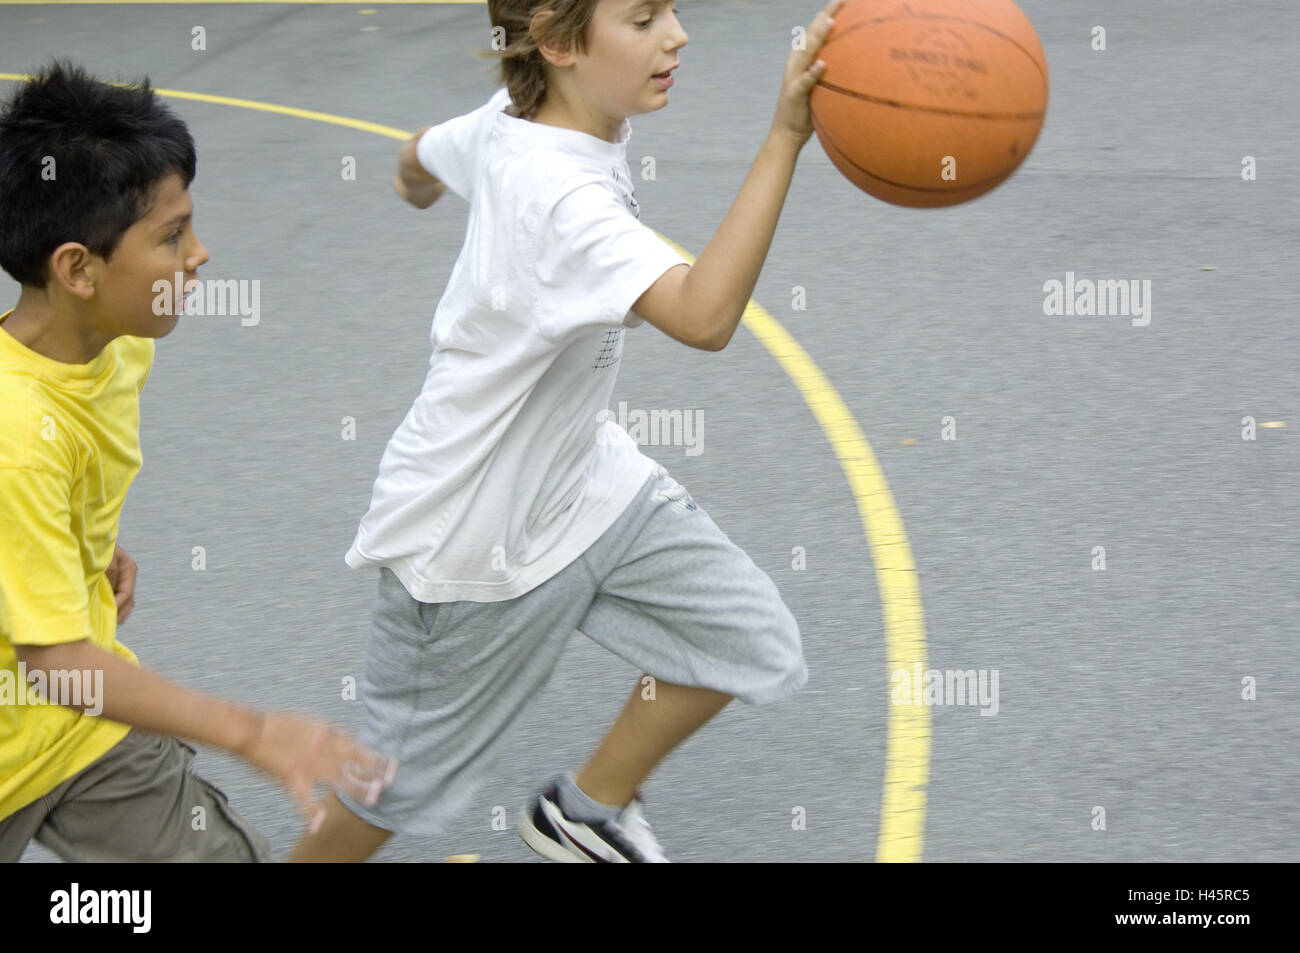 Boys, two, basketball, play, ball, match, Stock Photo